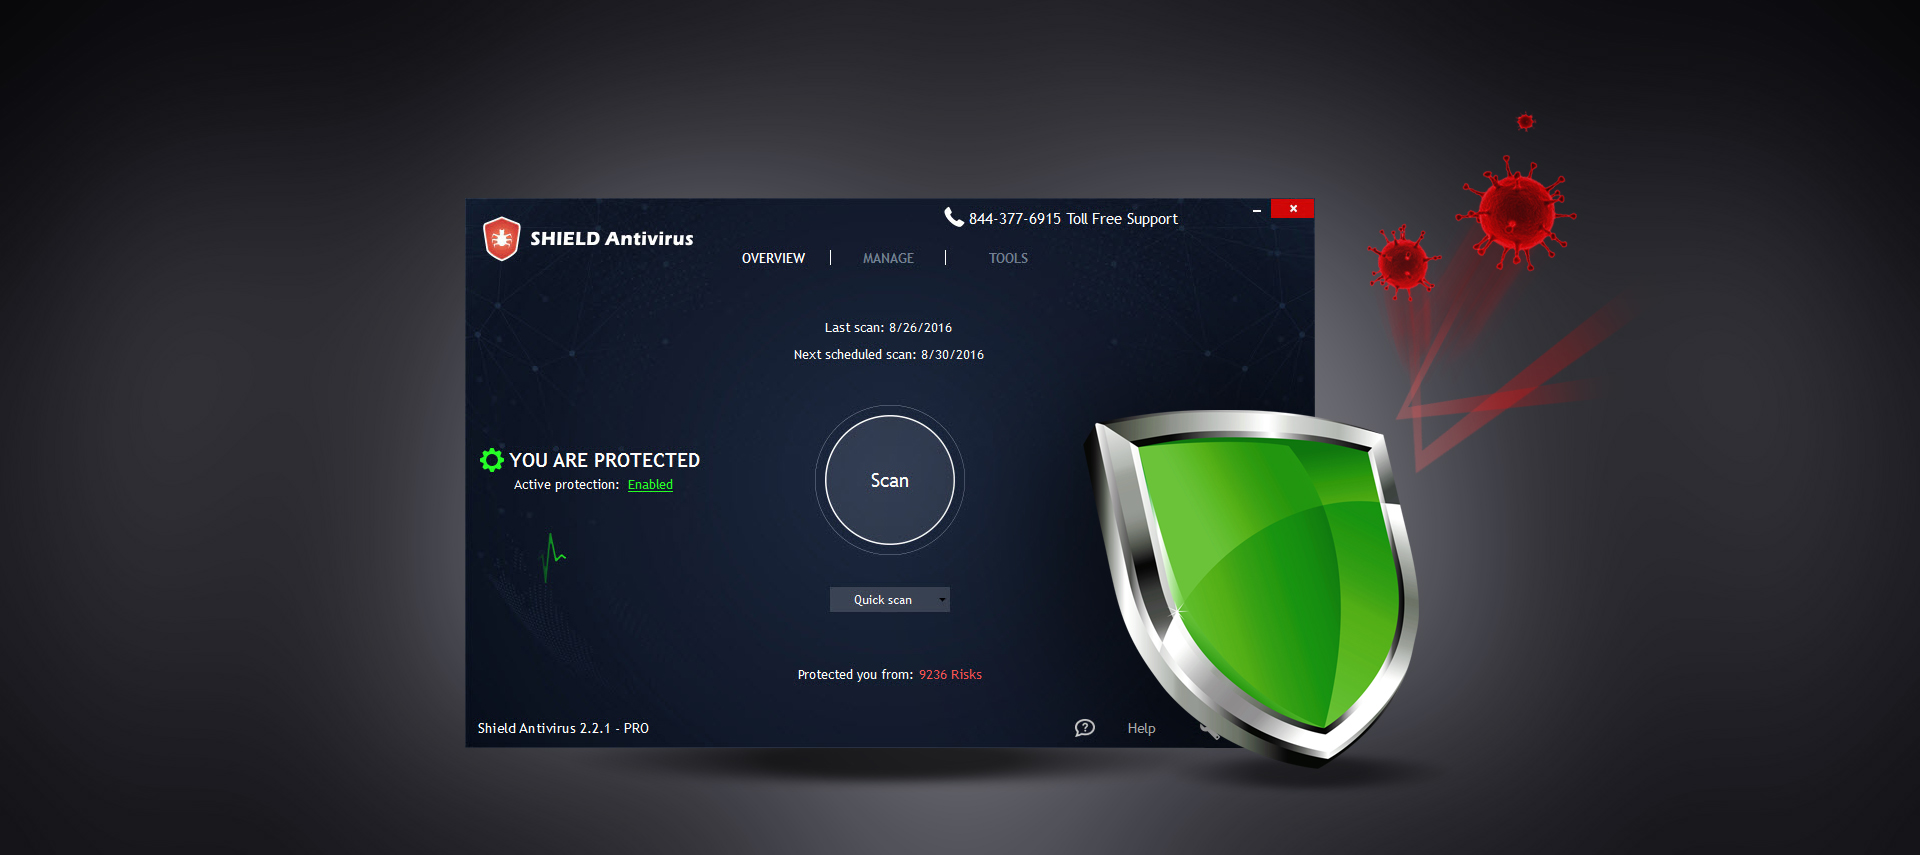 Shield Antivirus Pro 5.2.4 instal the last version for apple